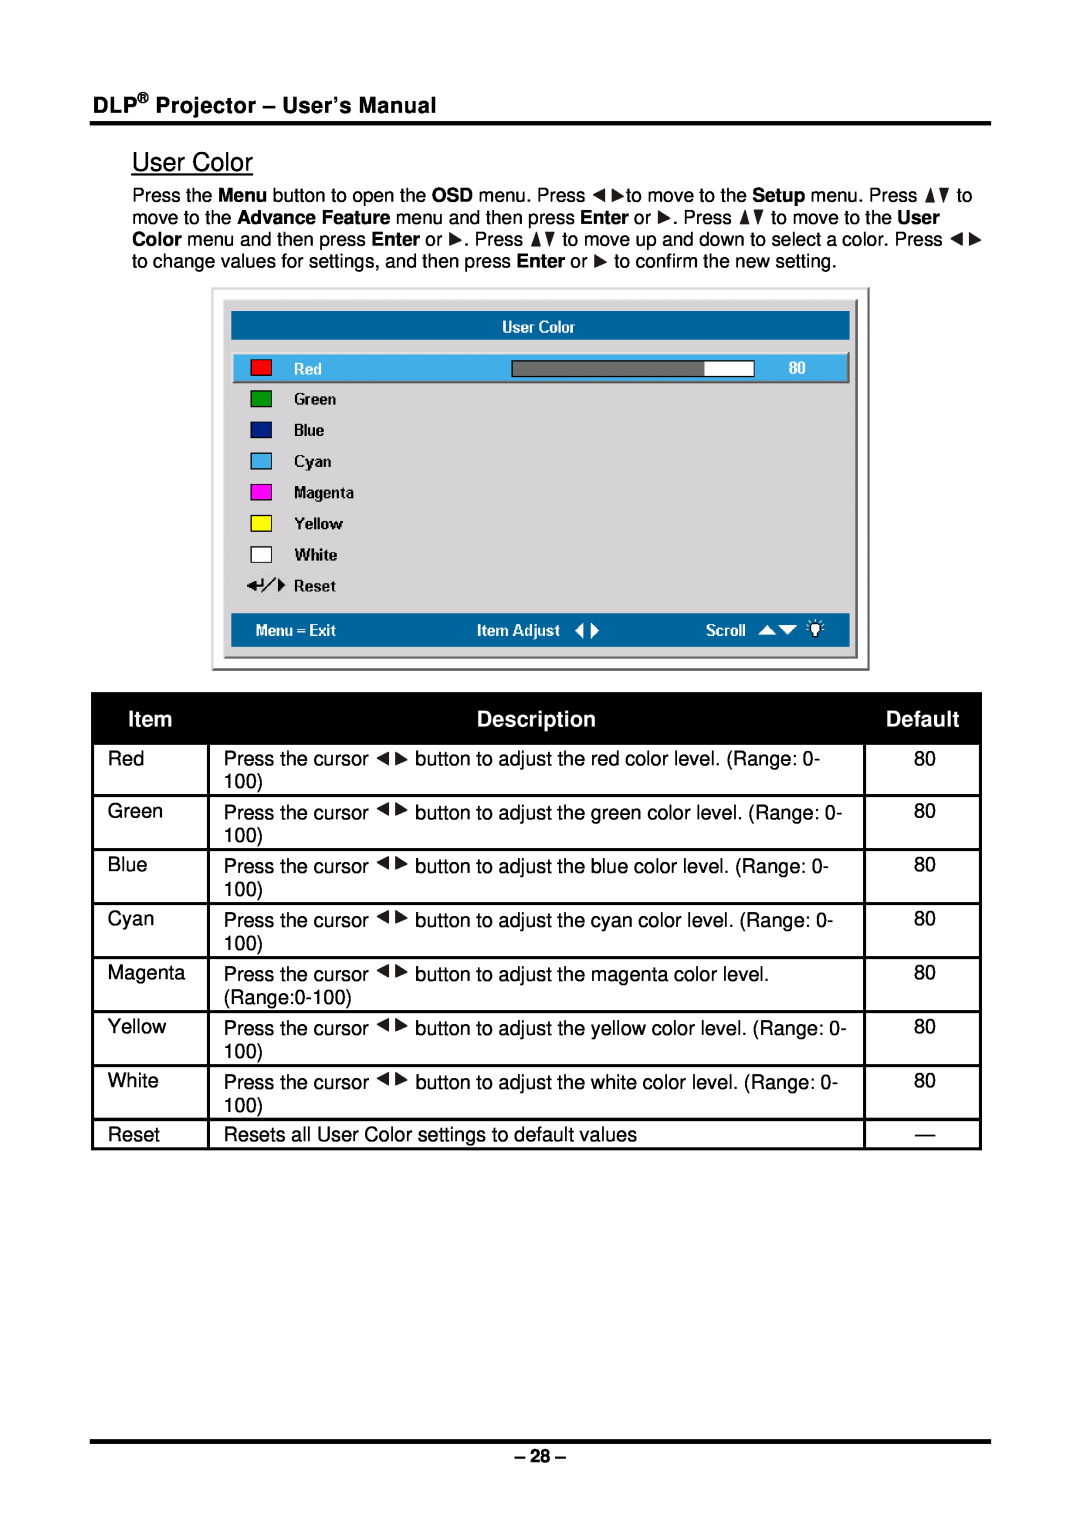 Planar PR5022 manual User Color, DLP Projector - User’s Manual, Description, Default 